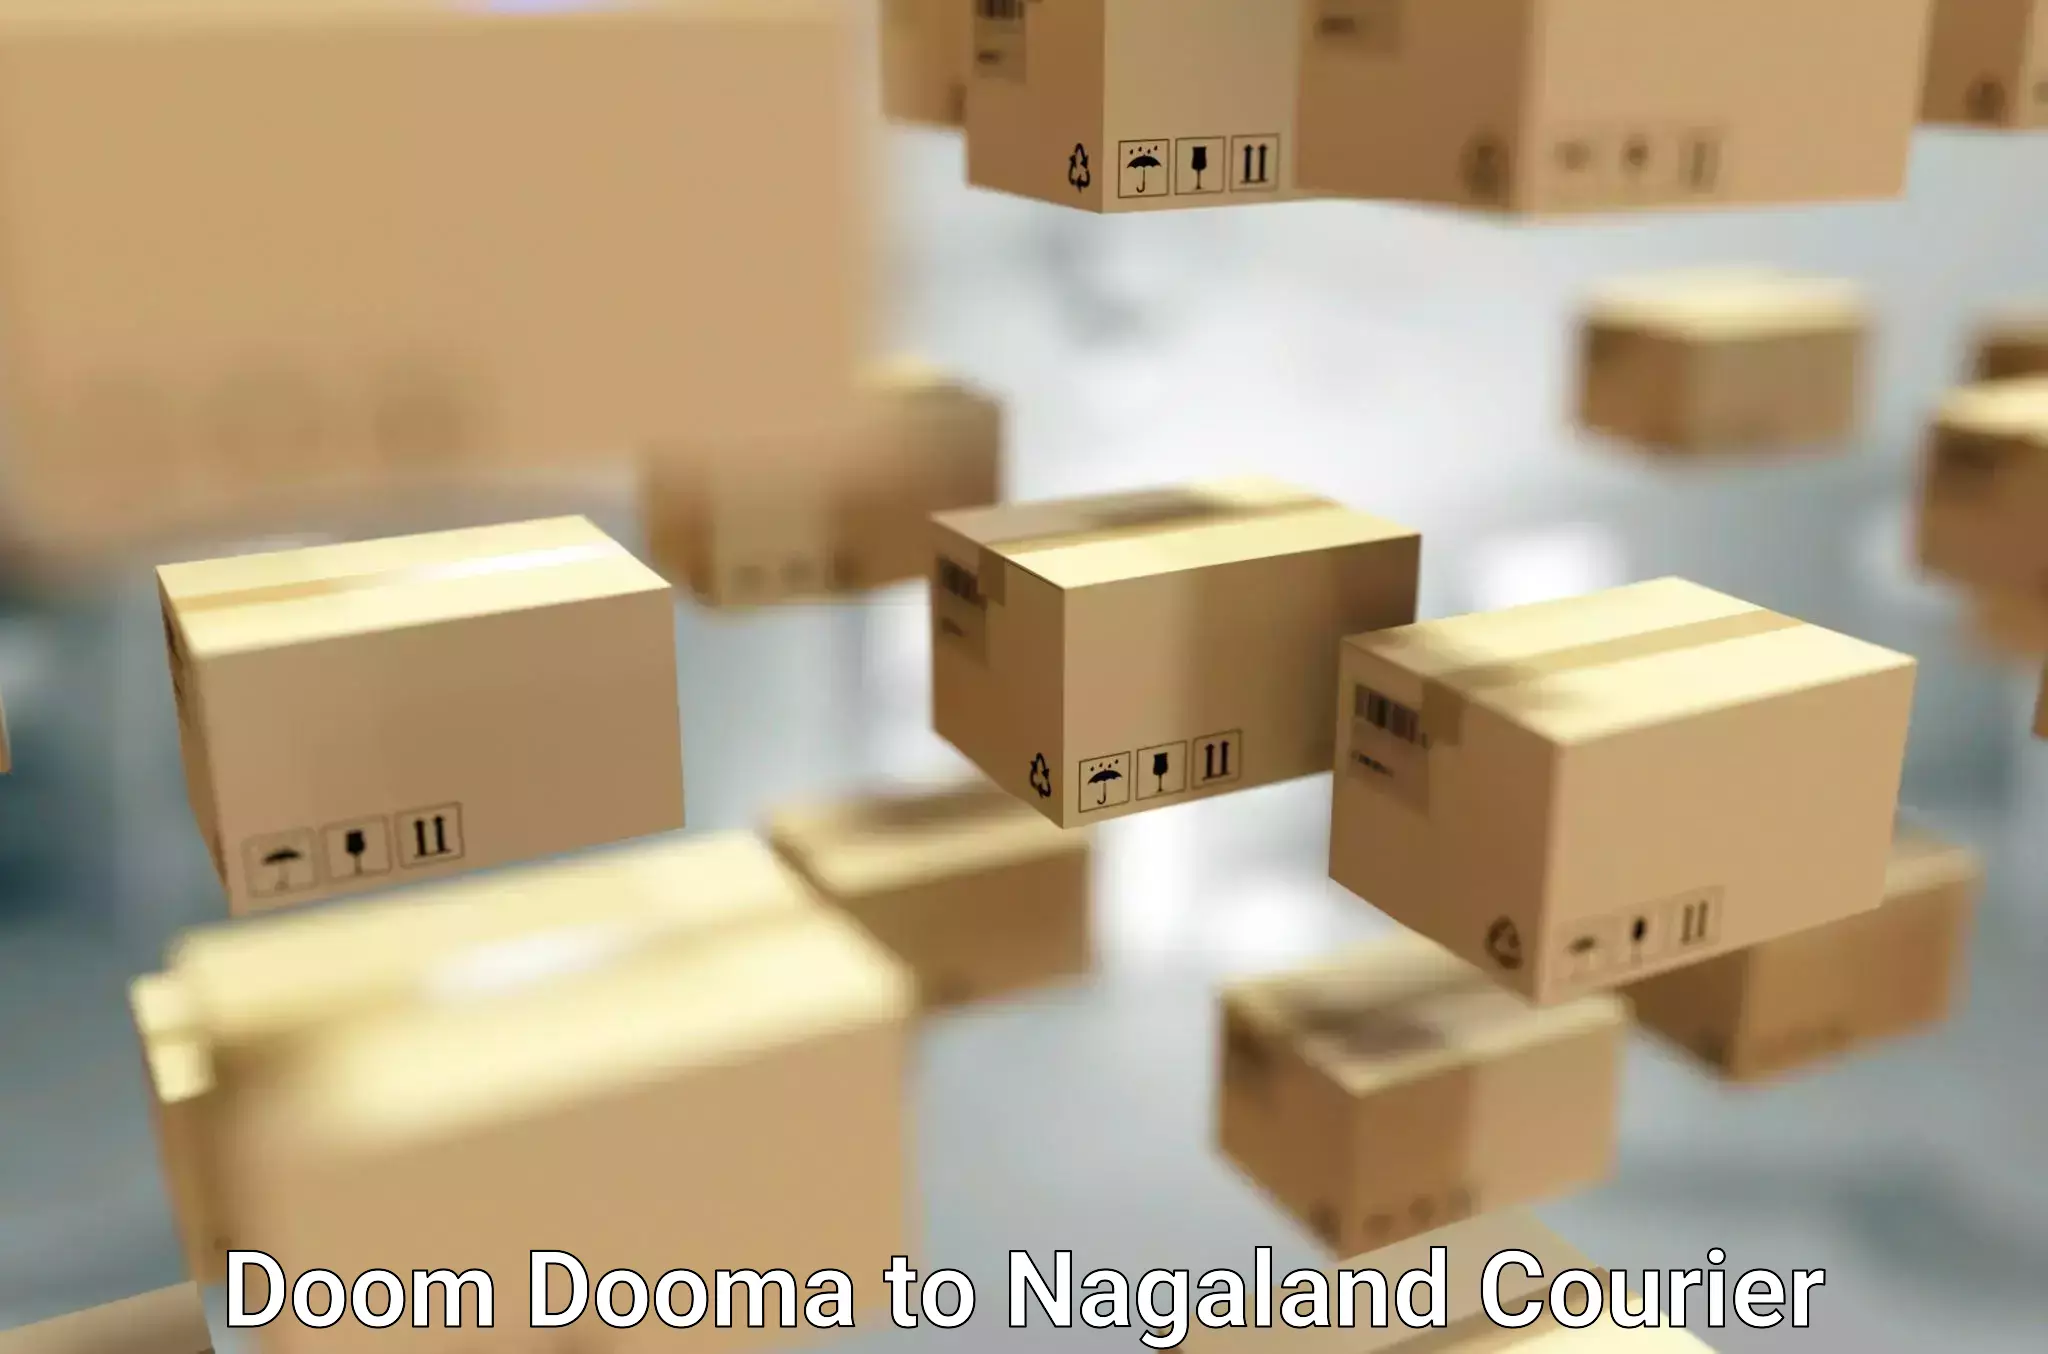 Furniture delivery service Doom Dooma to Nagaland